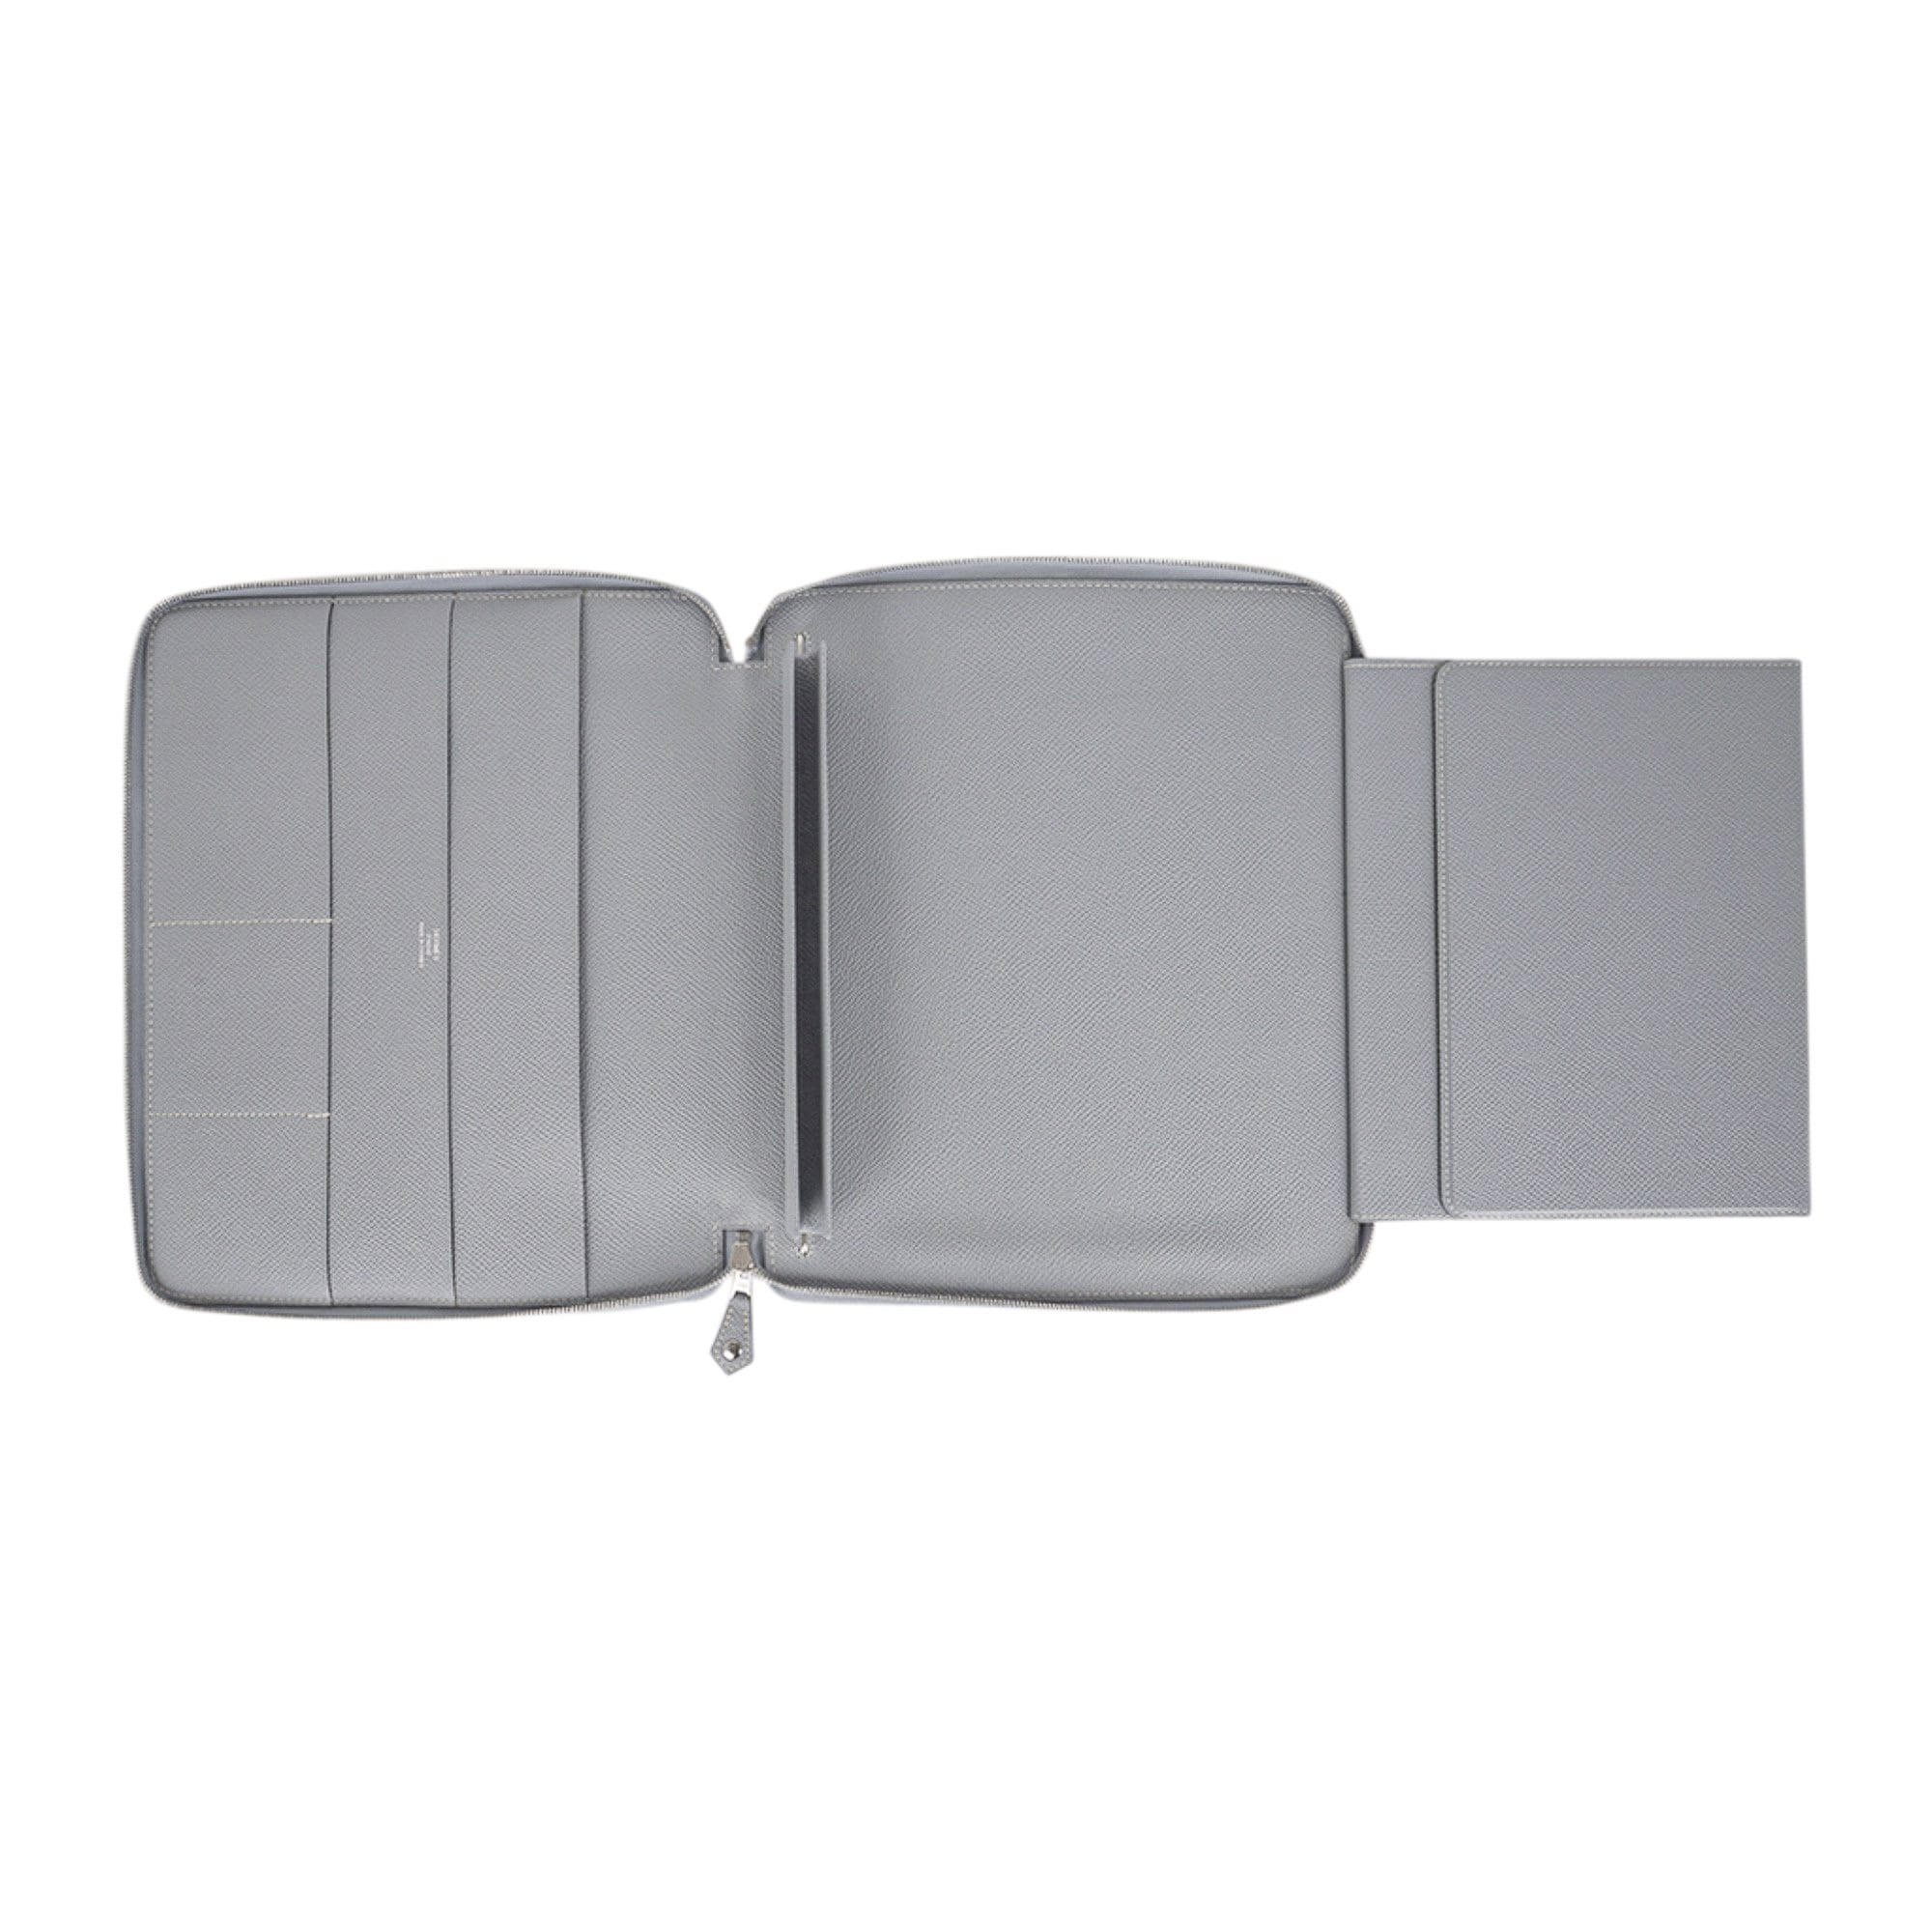 Luxury iPad Sleeves : Salvatore Ferragamo iPad Cases